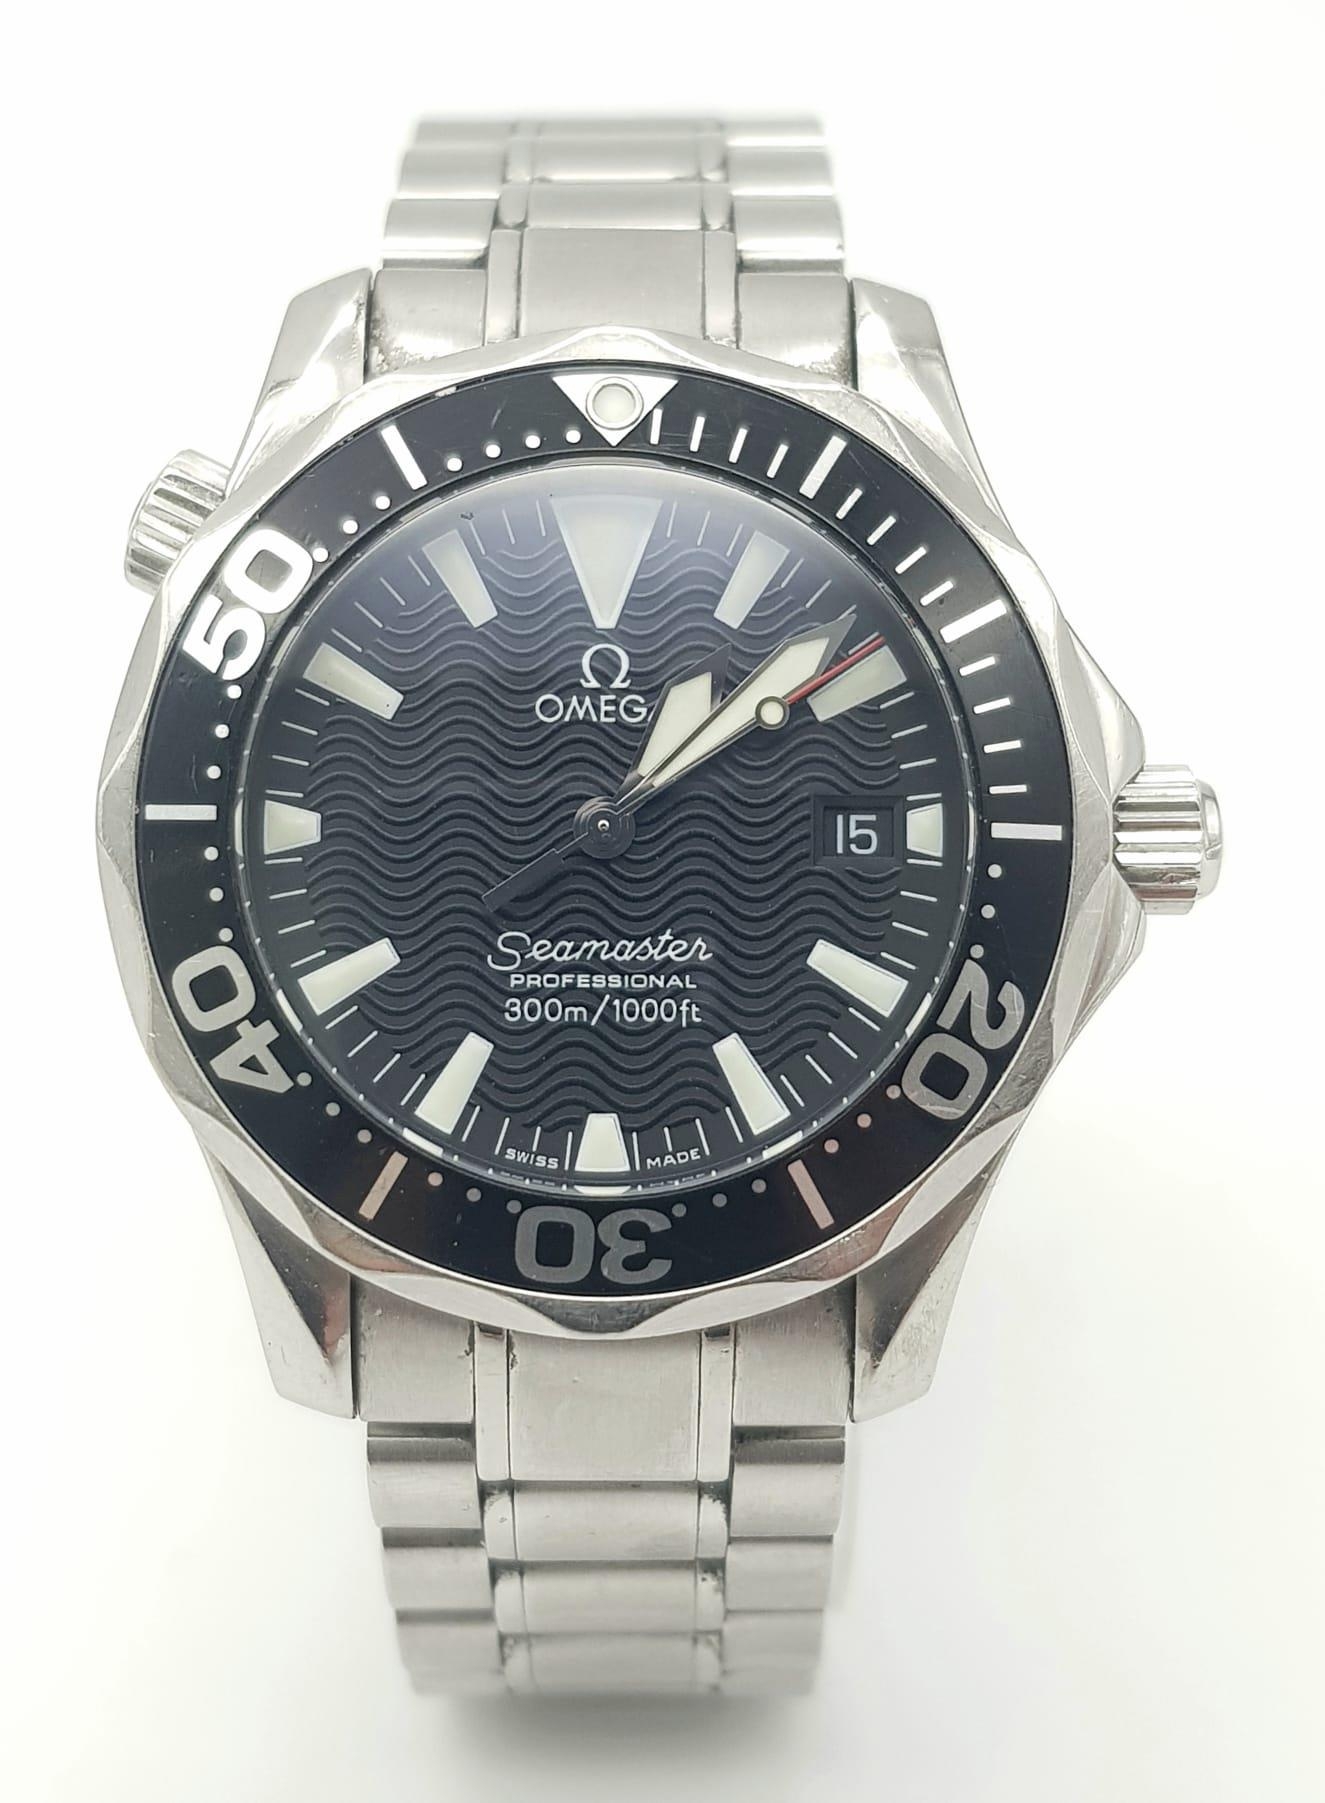 An Omega Seamaster Professional Quartz Gents Watch. Model 22625000. Calibre - 1538 - Manufactured